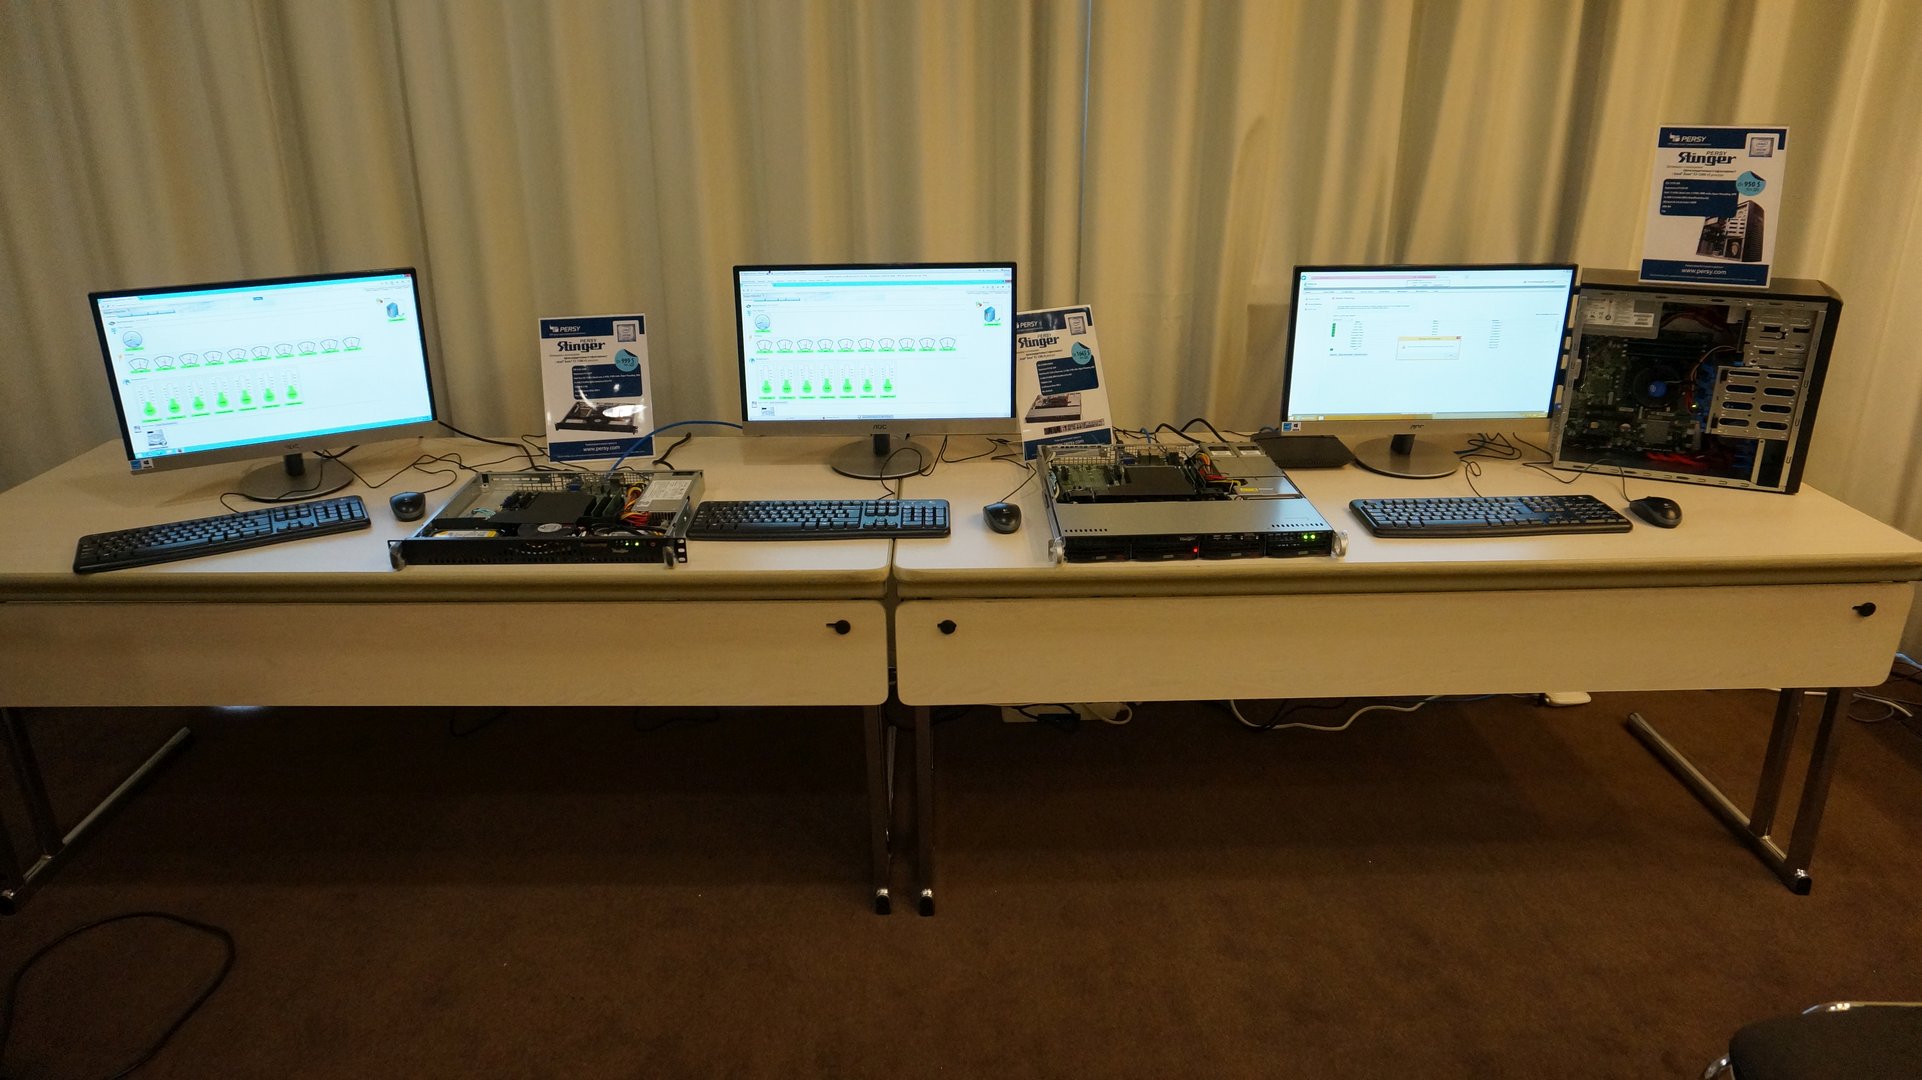 Persy Stinger Xeon E3 v5 workstations